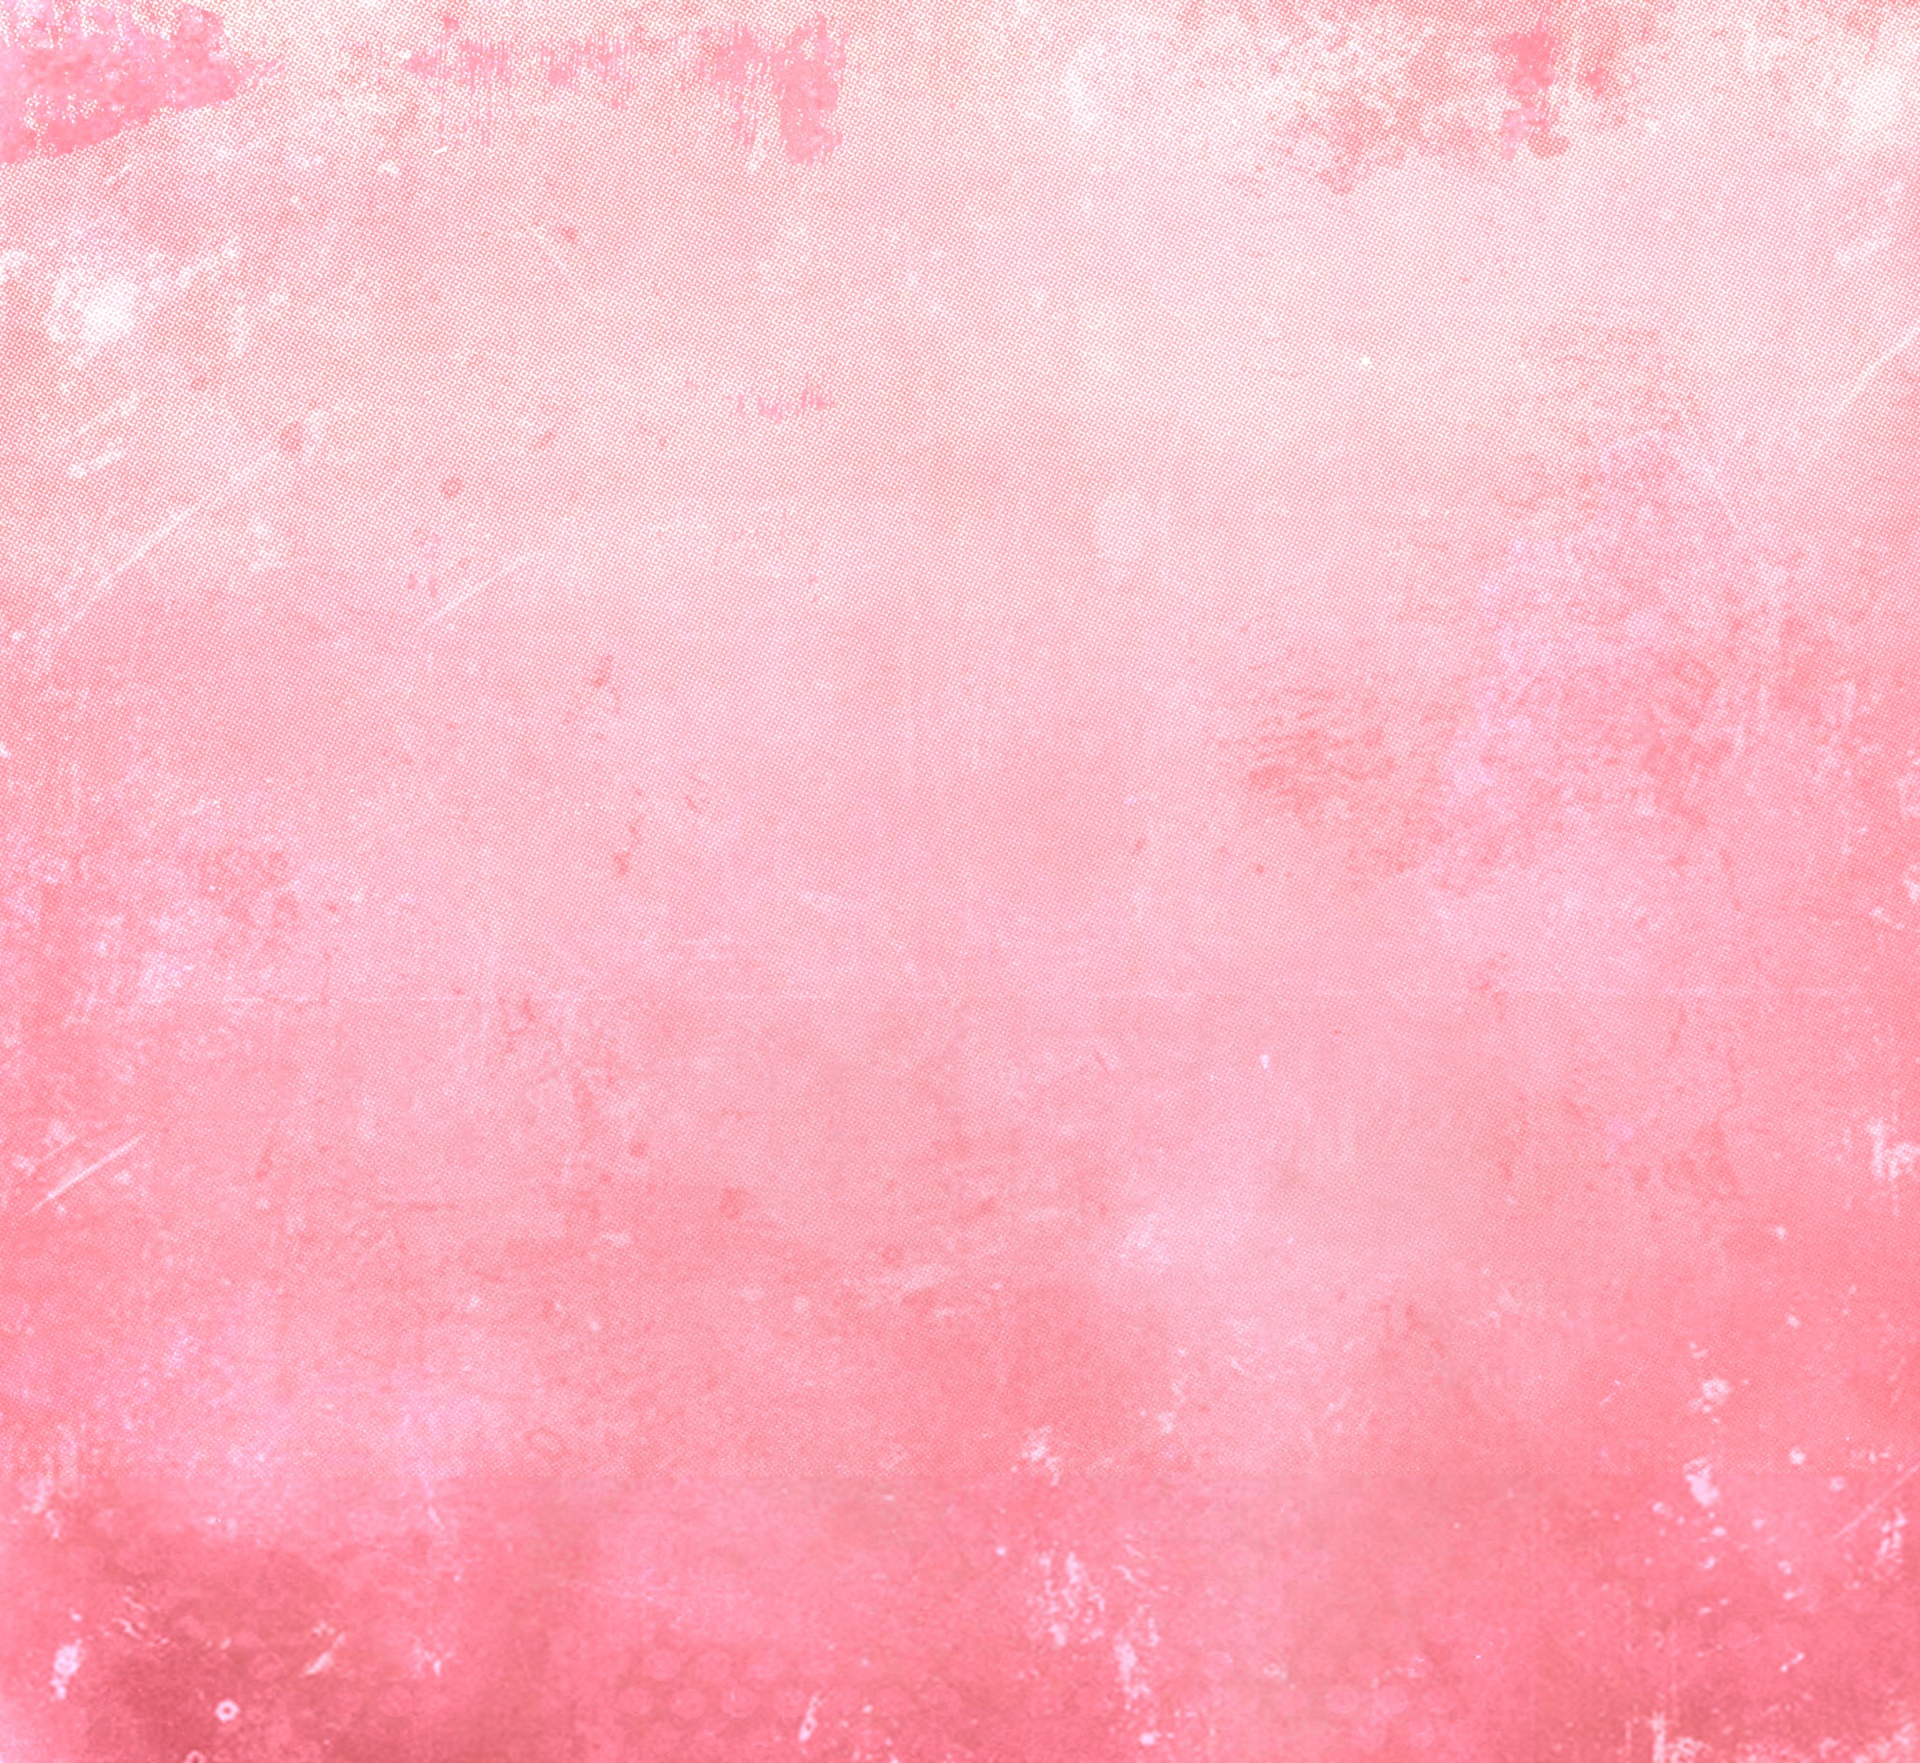 Pink grunge wallpaper background for scrapbooking